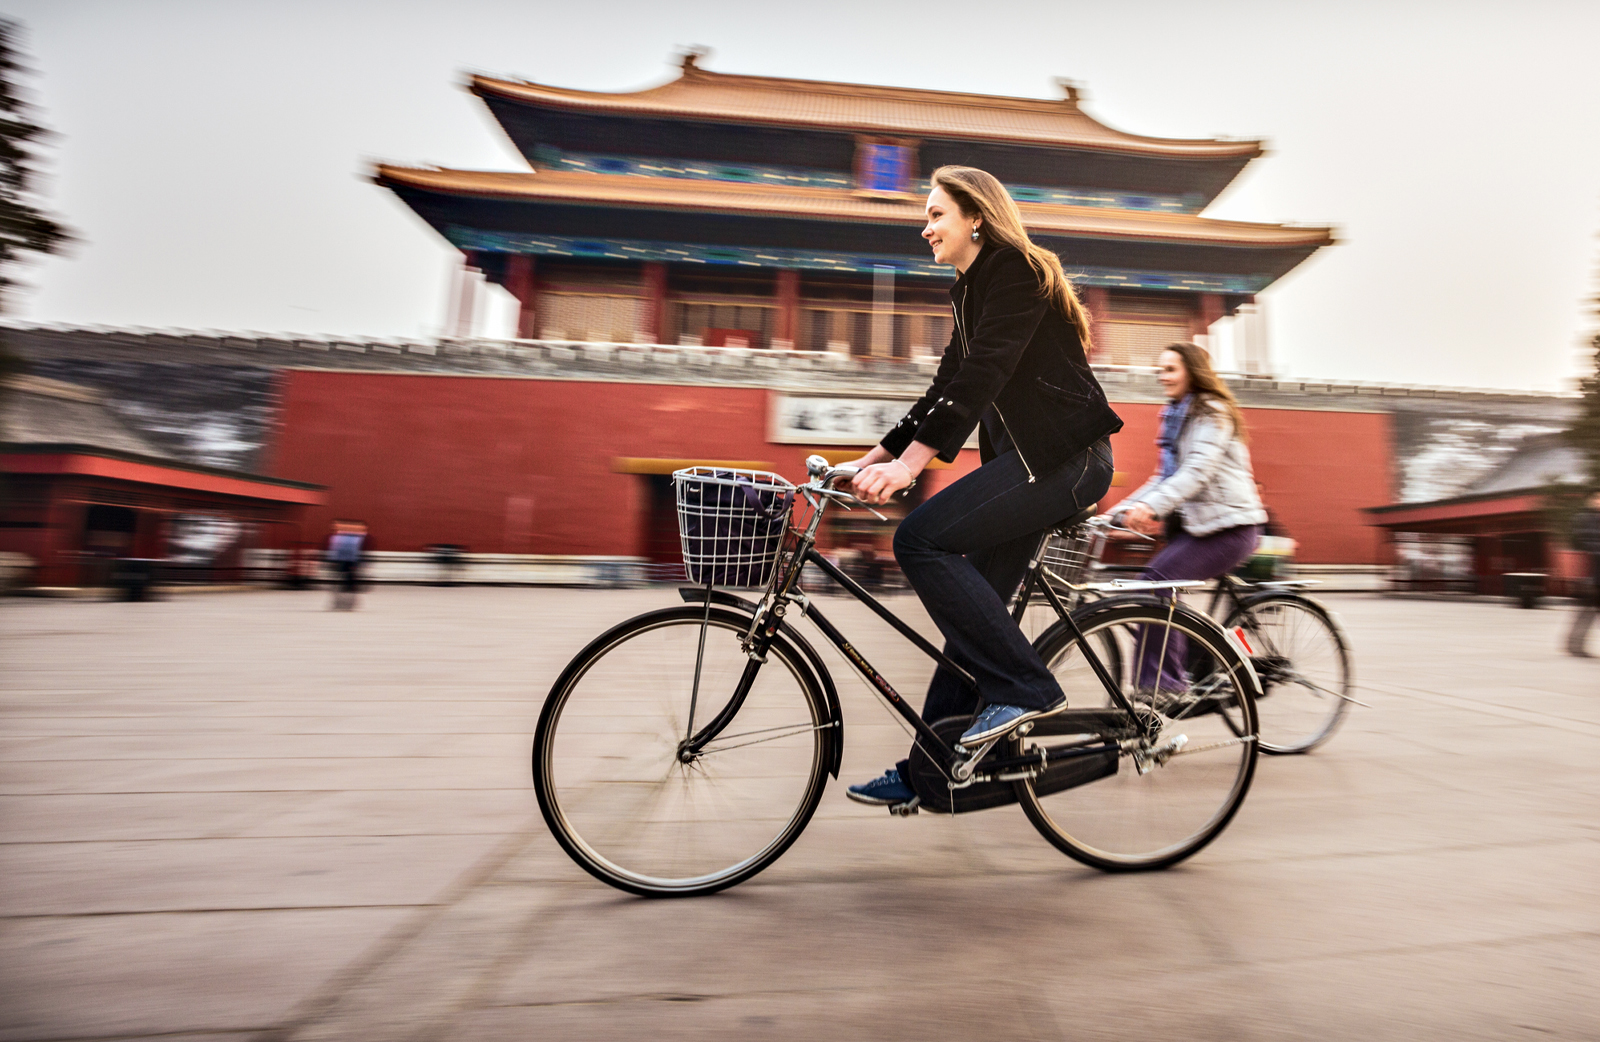 riding bikes in China